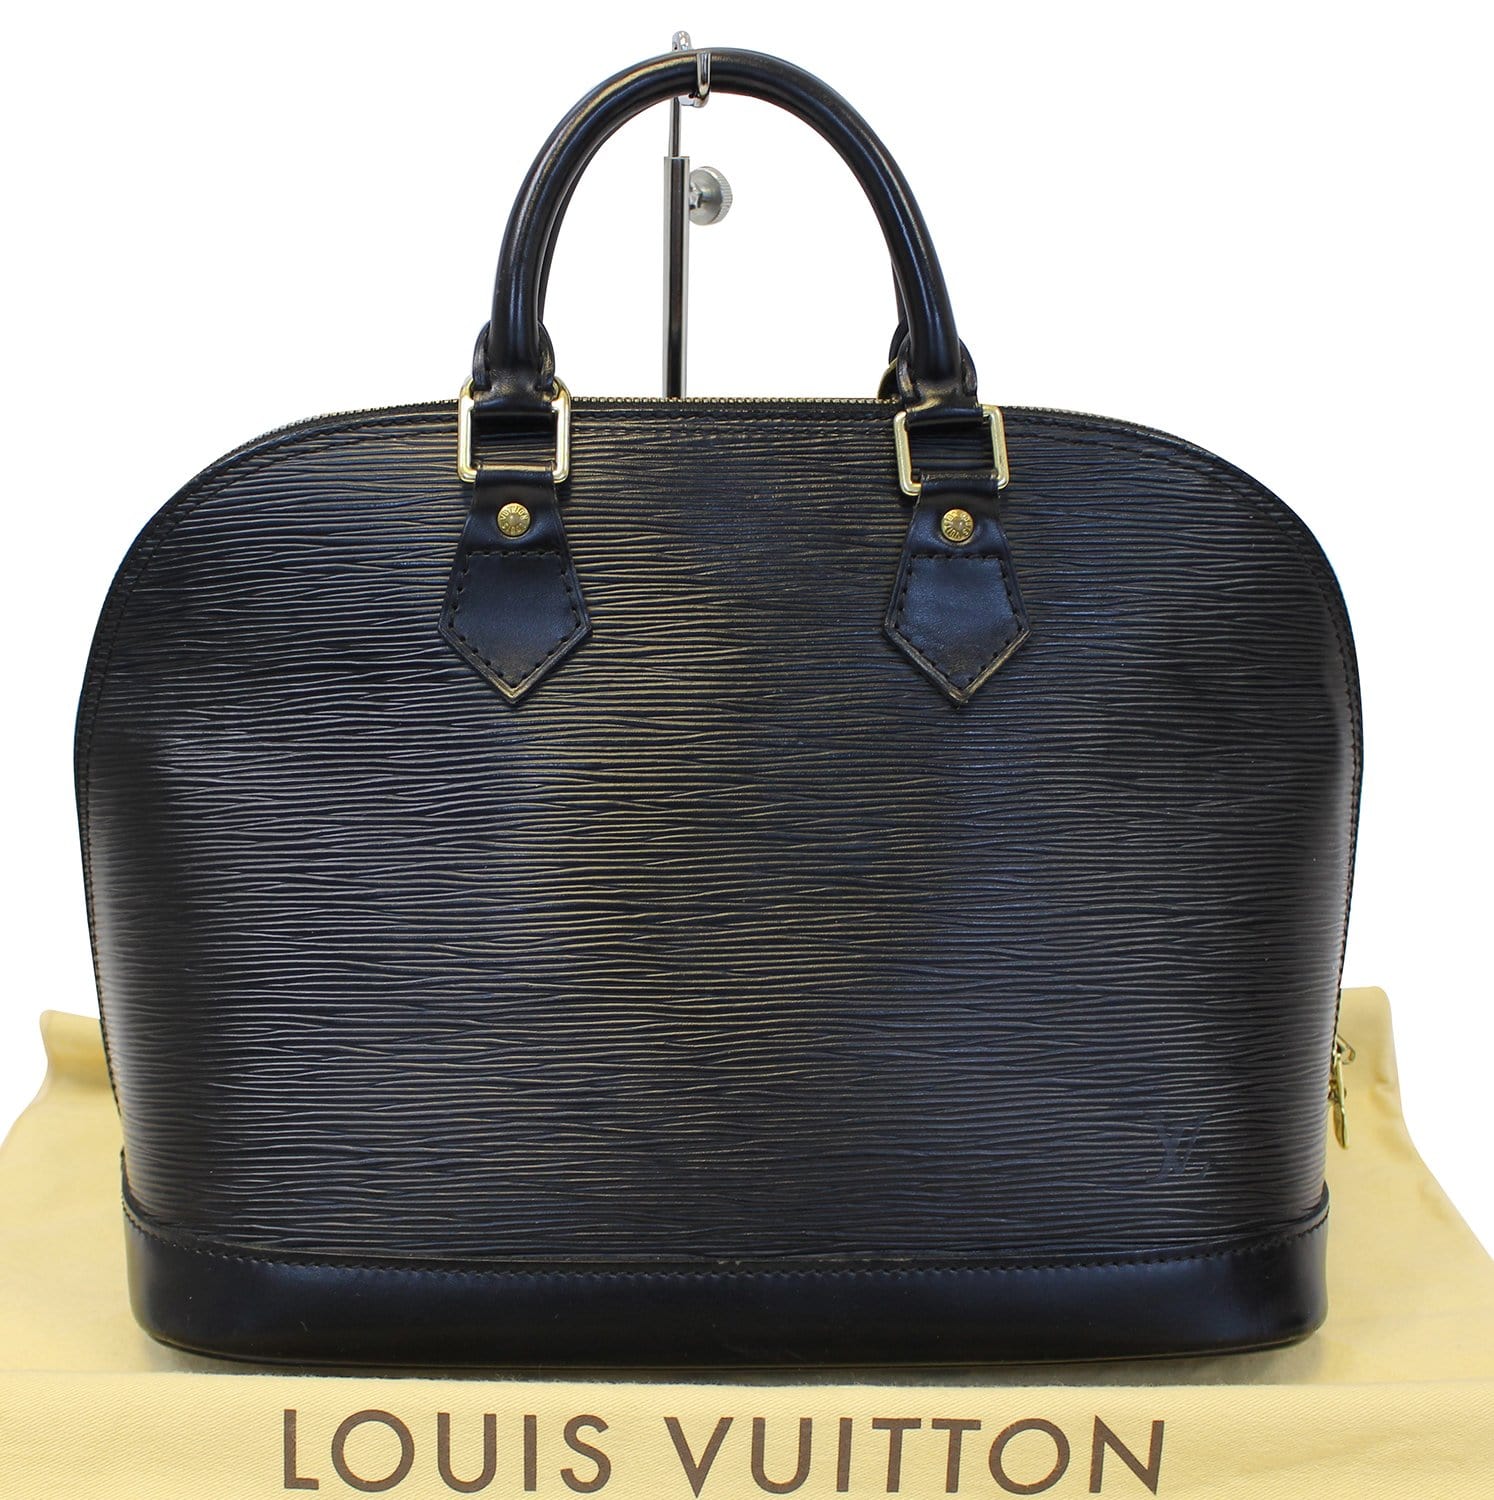 Louis VUITTON Bag model Alma in black epi leather. D…